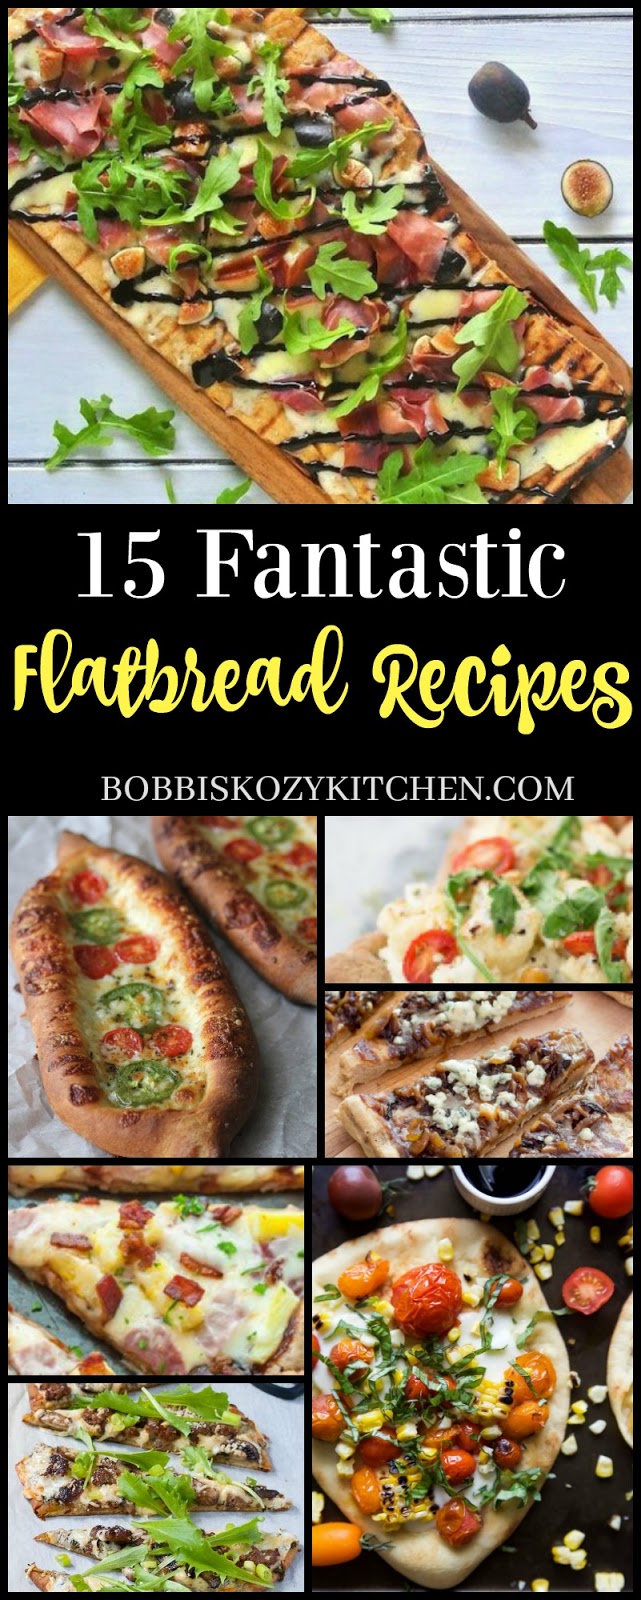 15 Fantastic Flatbread Recipes from www.bobbiskozykitchen.com